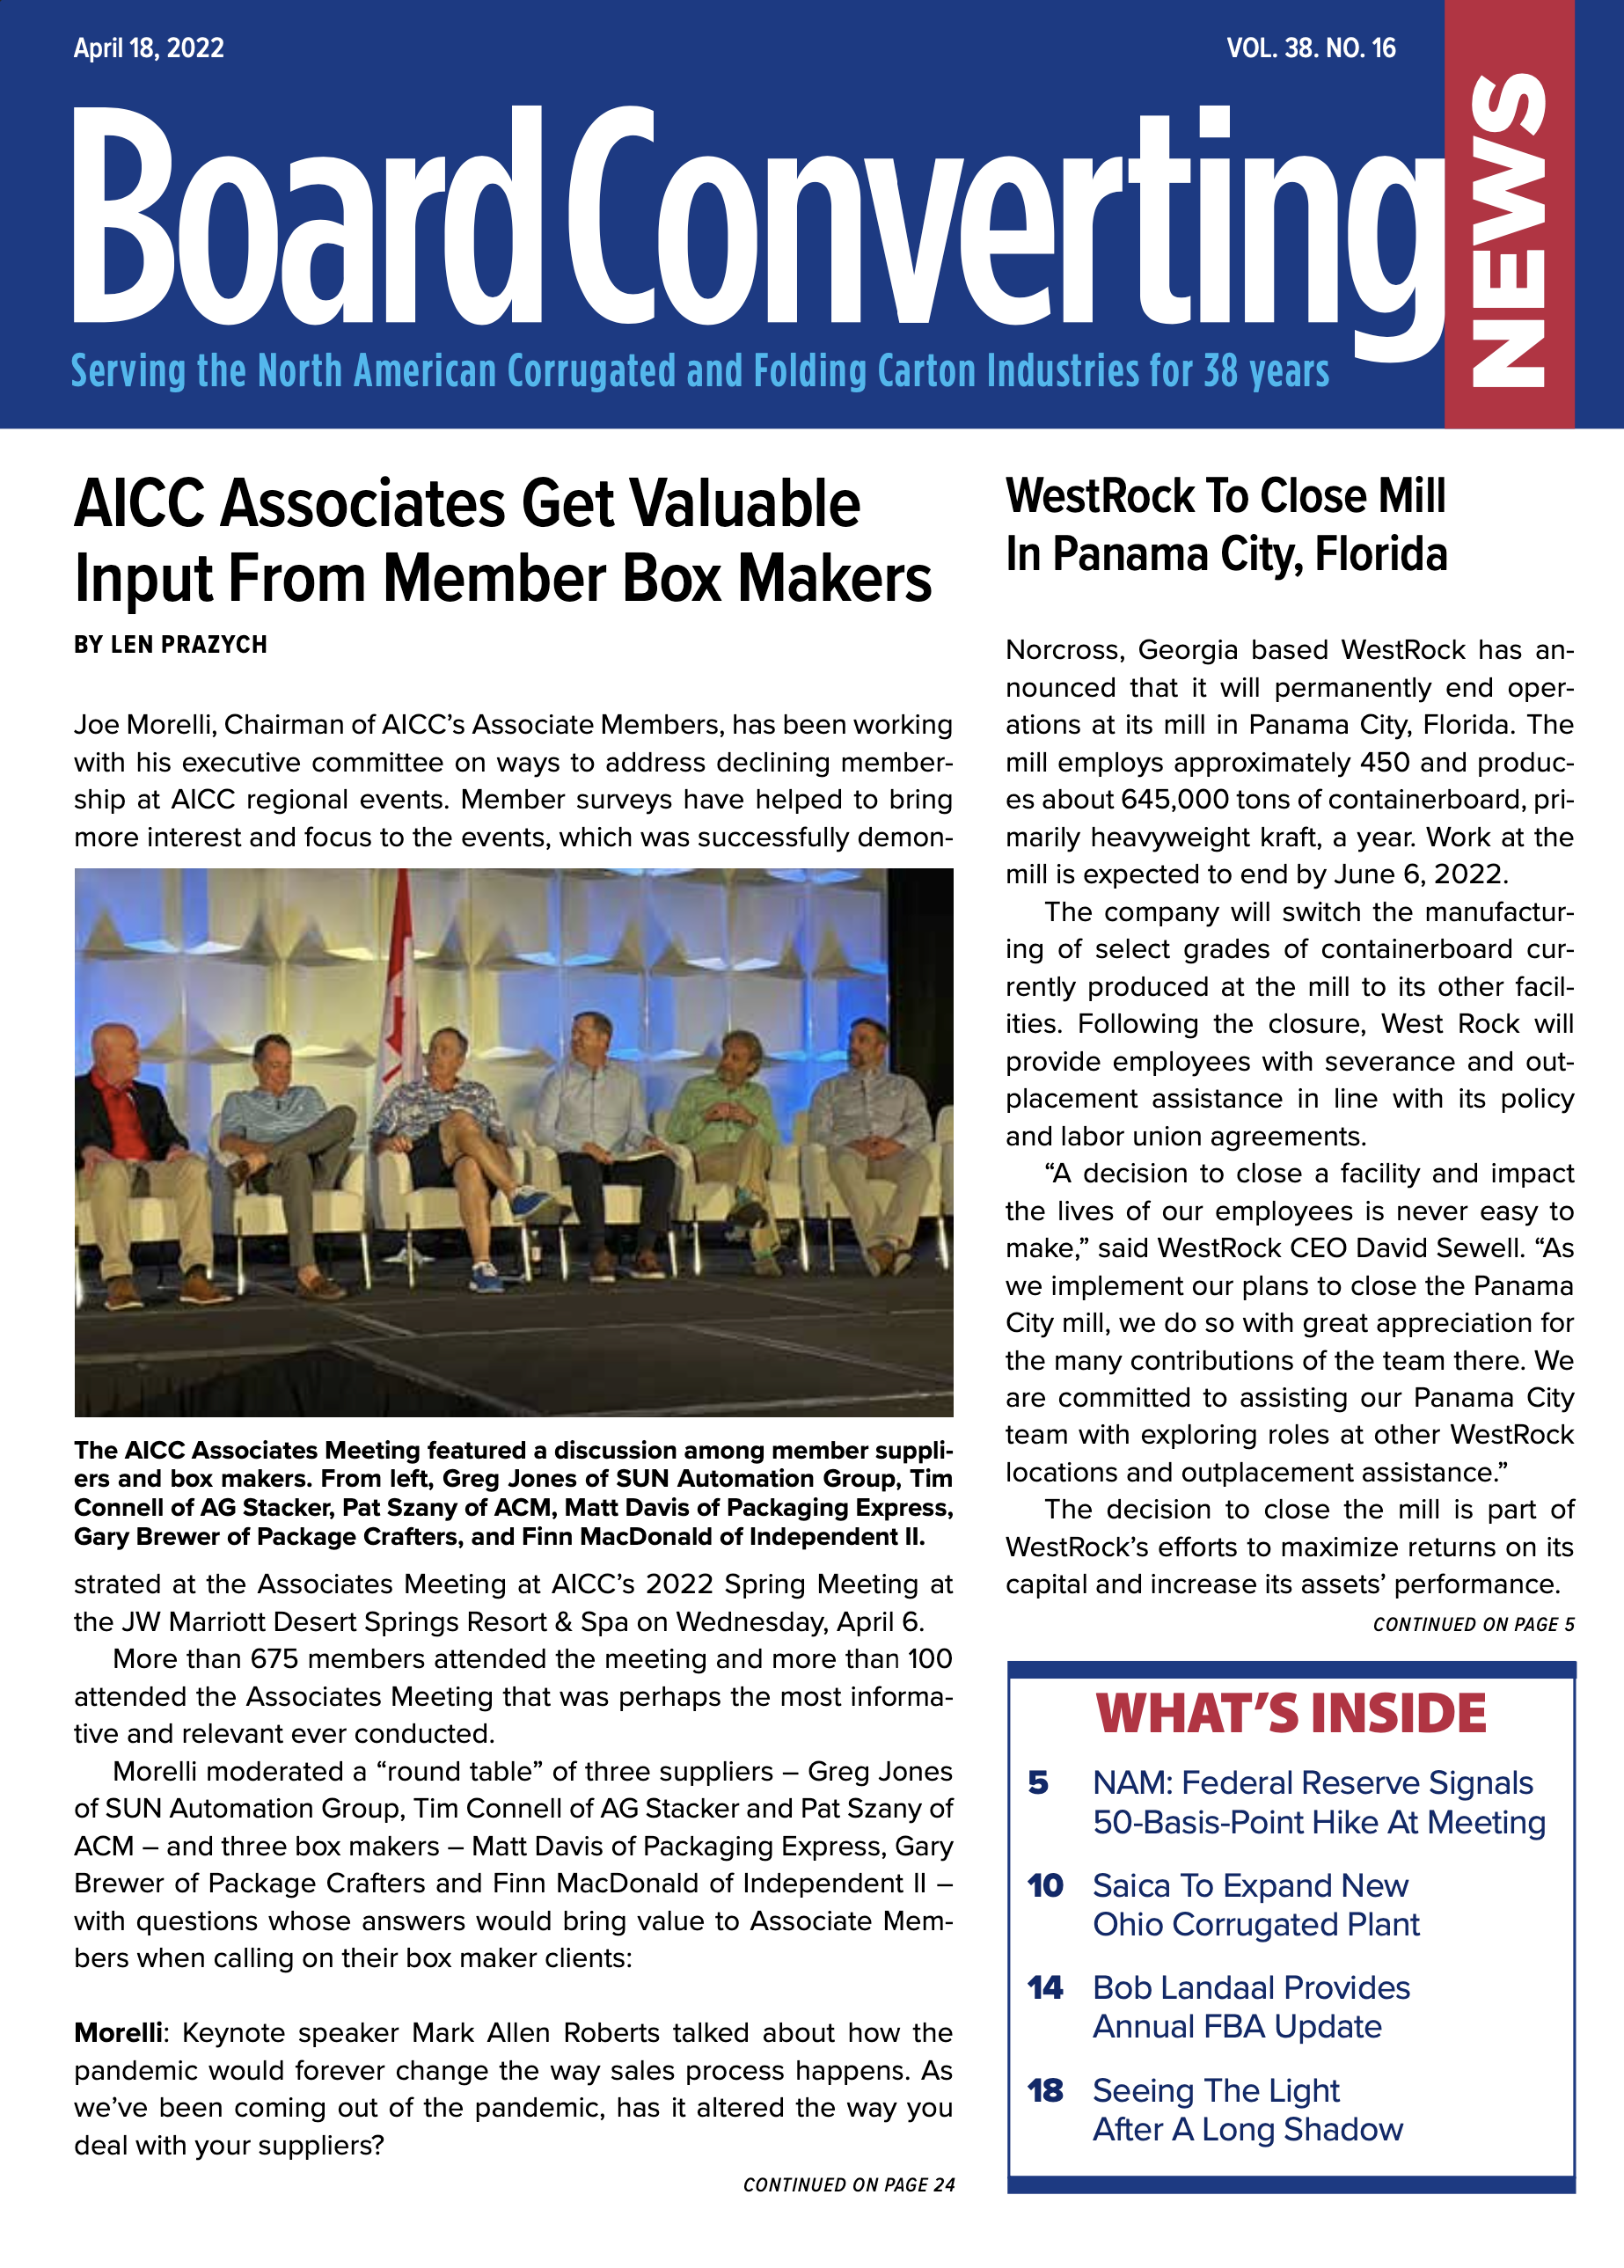 Board Converting News - AICC